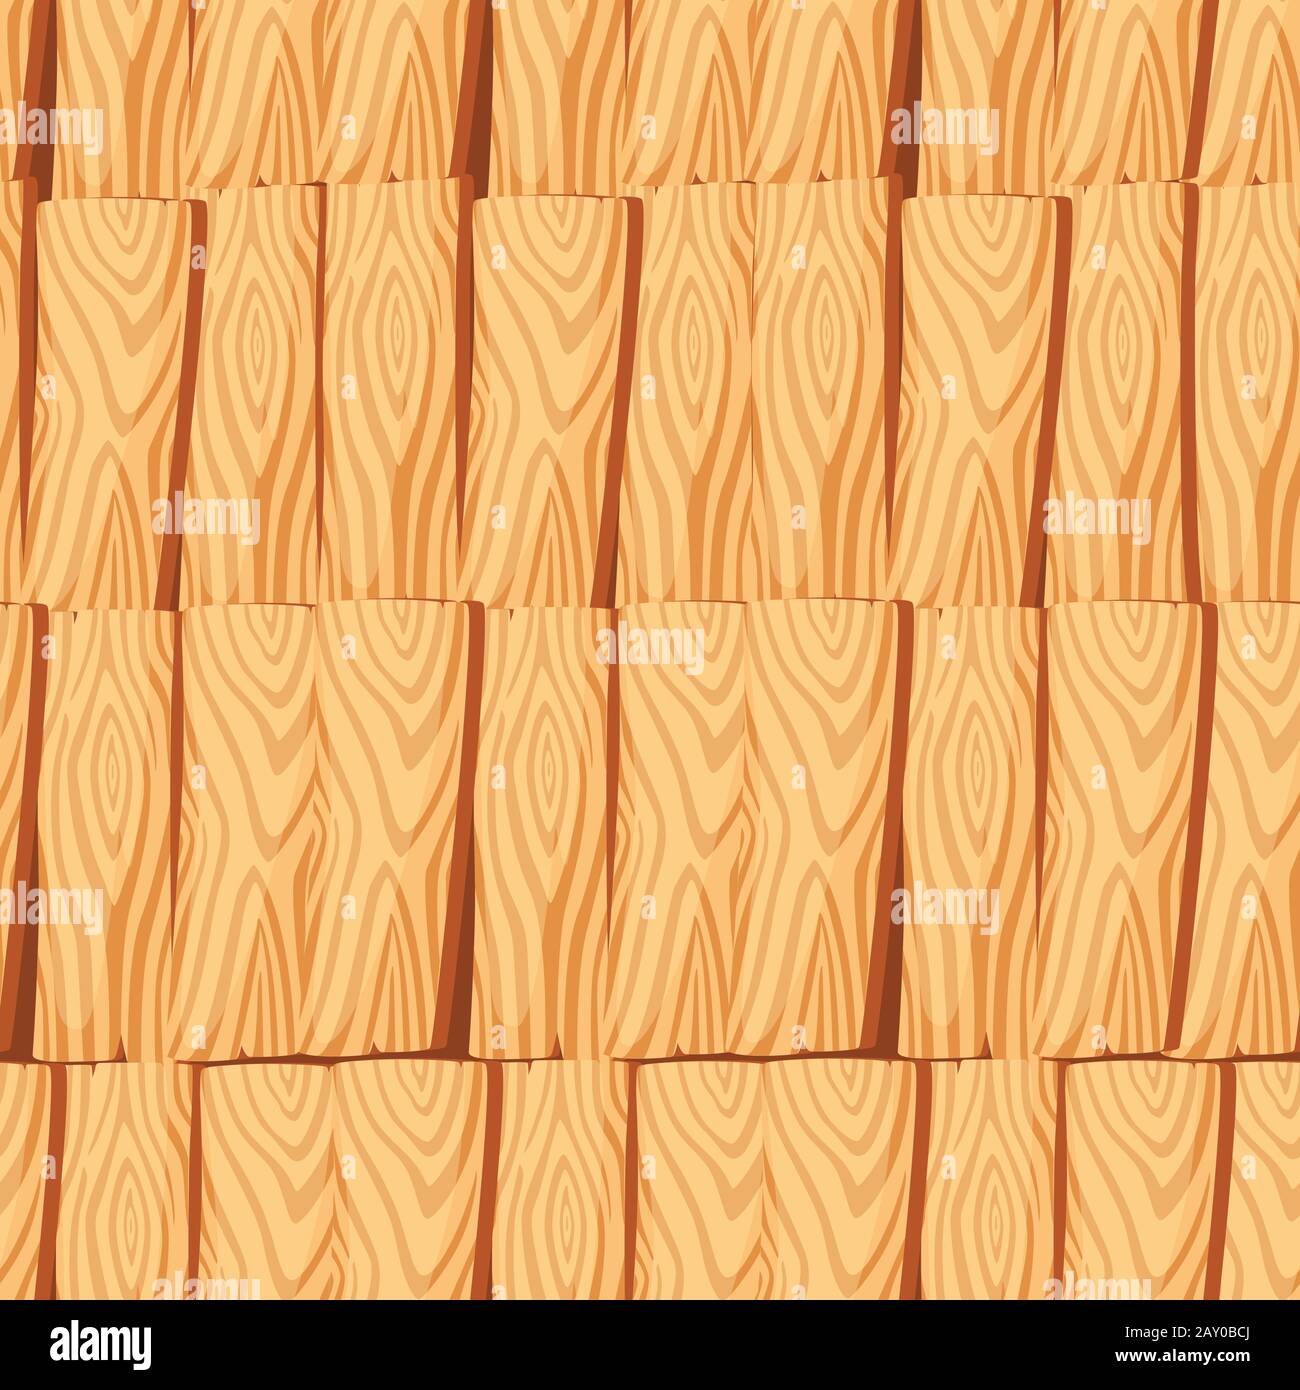 Seamless pattern of wooden planks board flat vector illustration. Stock Vector